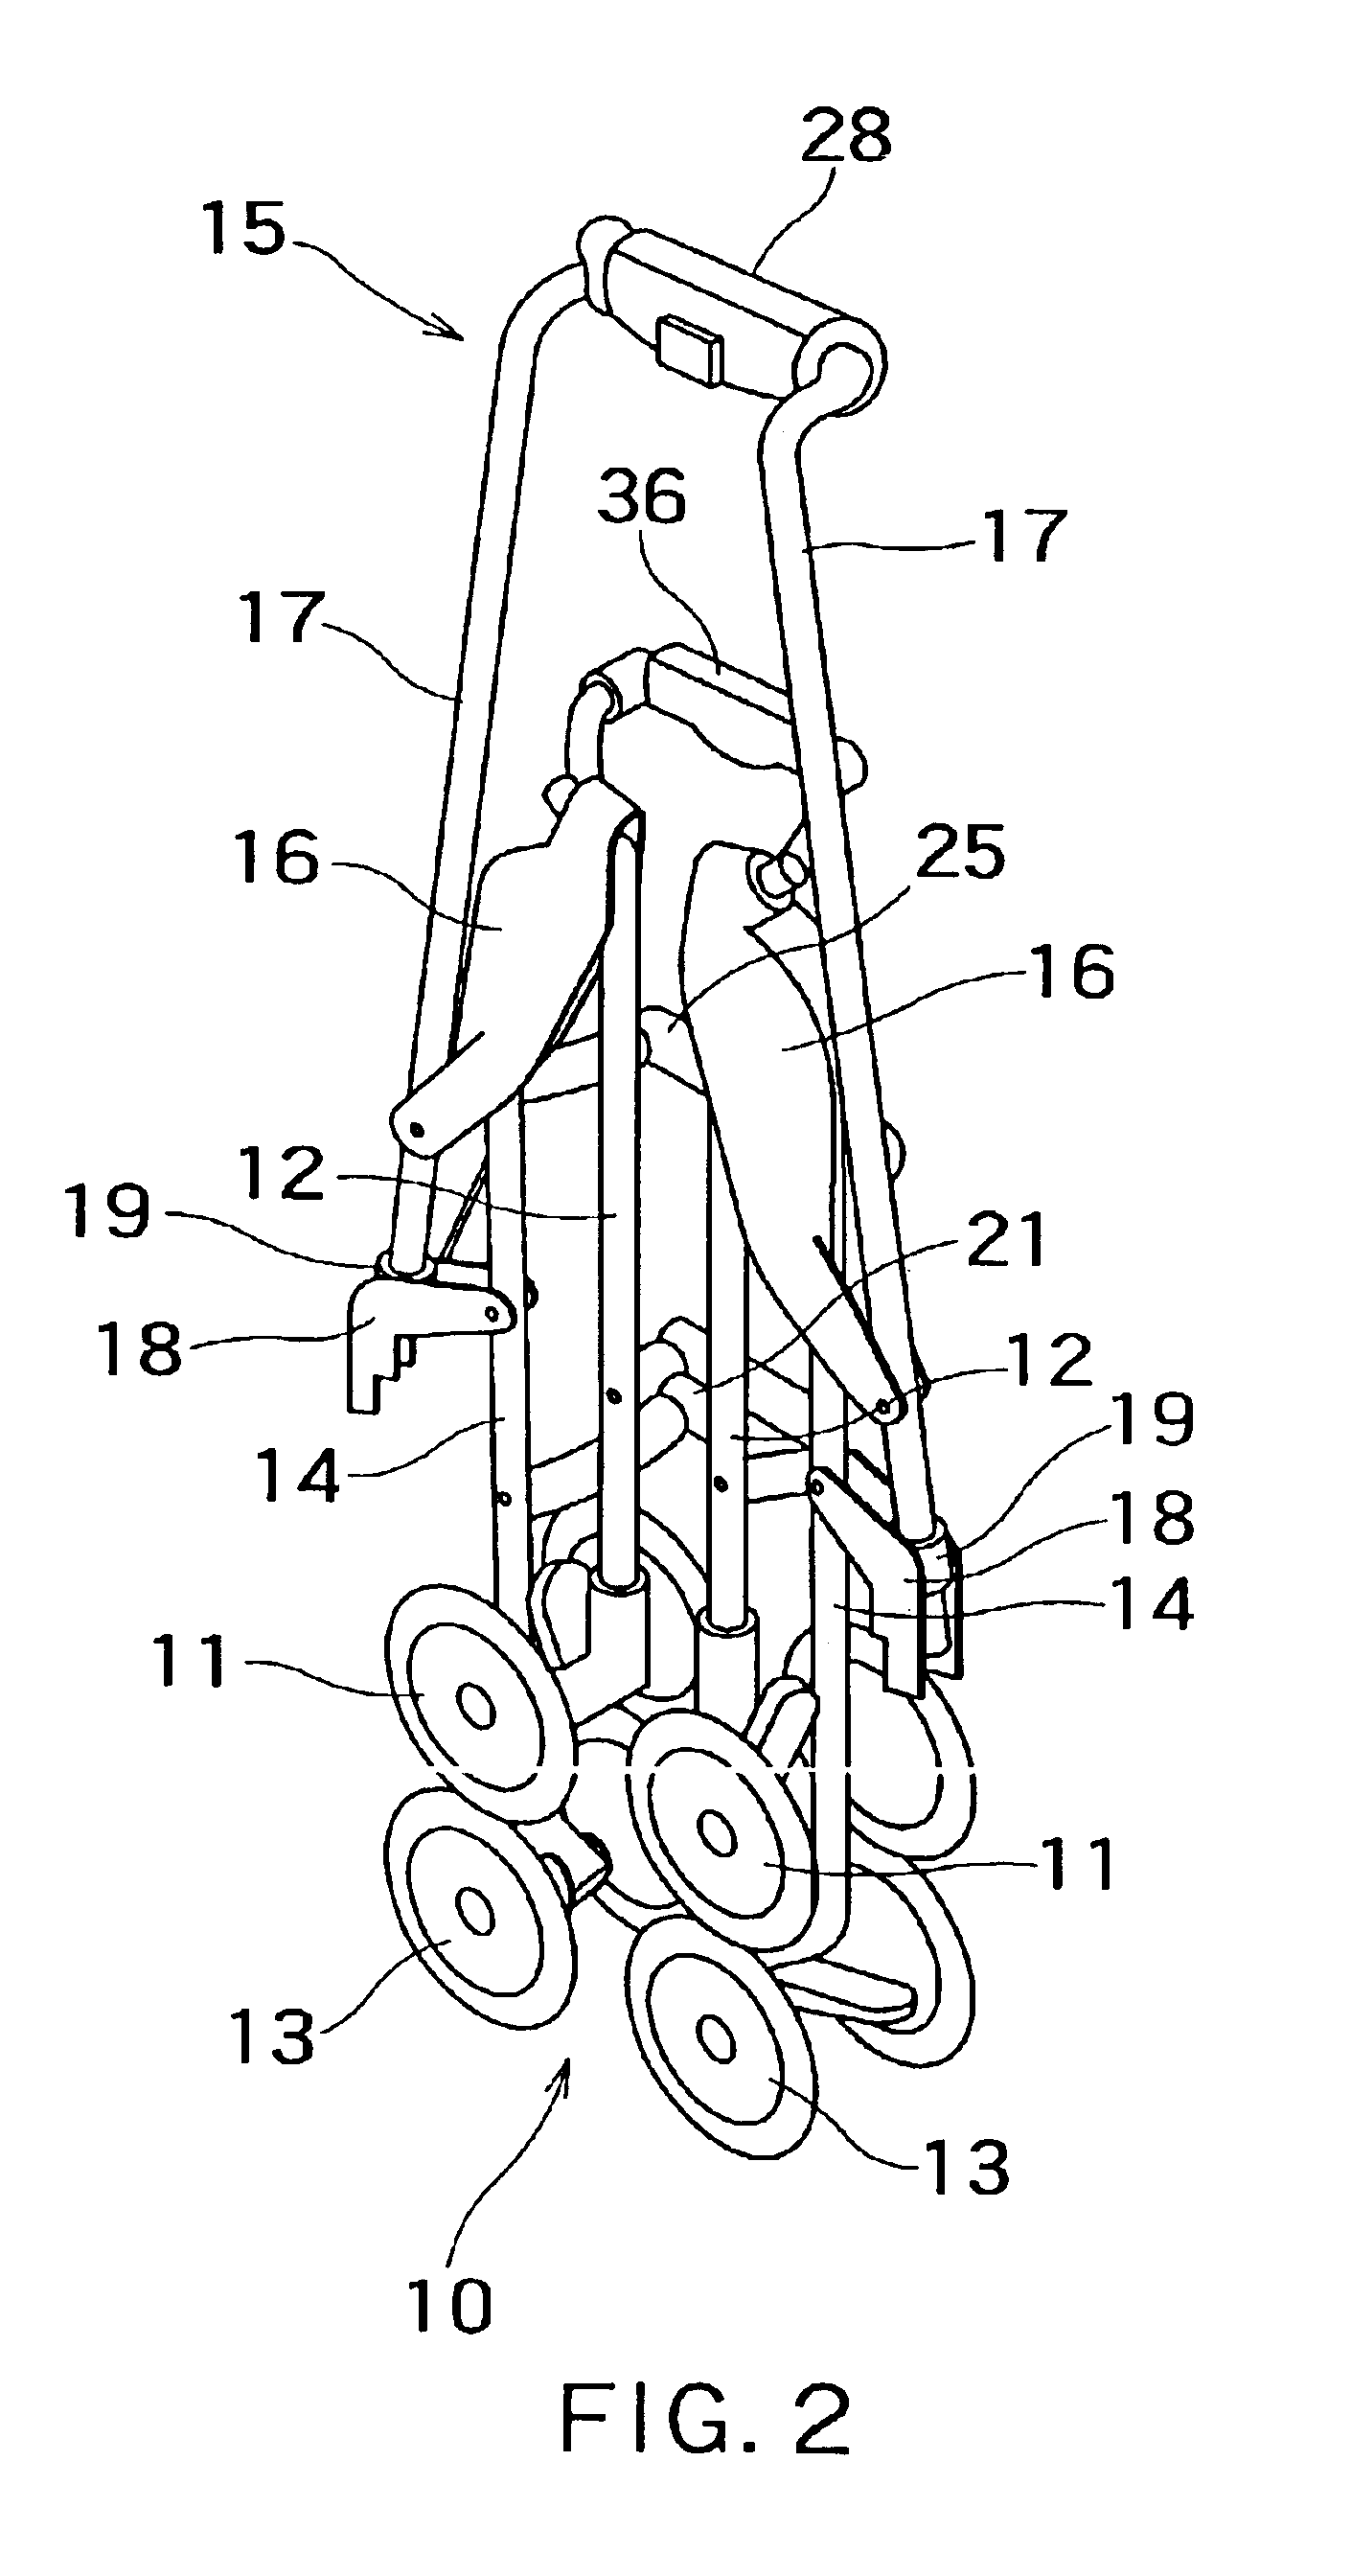 Stroller with a reclining mechanism